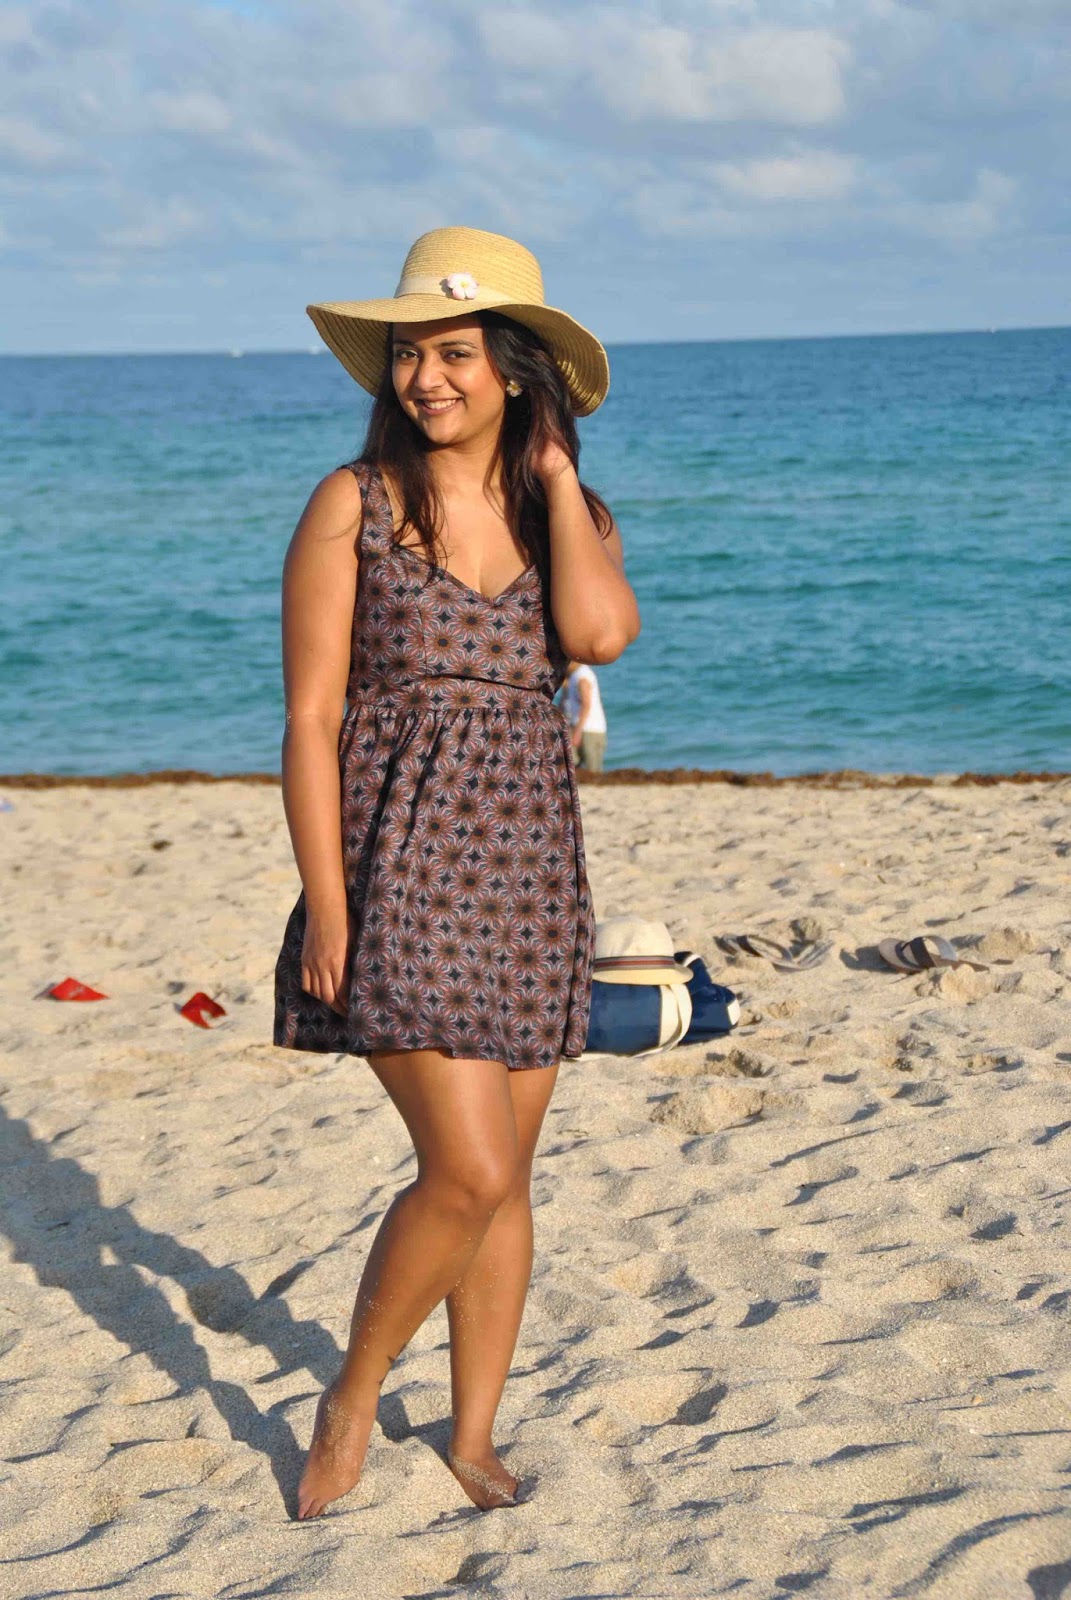 Beach dresses, indian girl in beach dress, ananya kiran, ananya in Miami, open back dresses, summer dresses, girl wearing a hat 